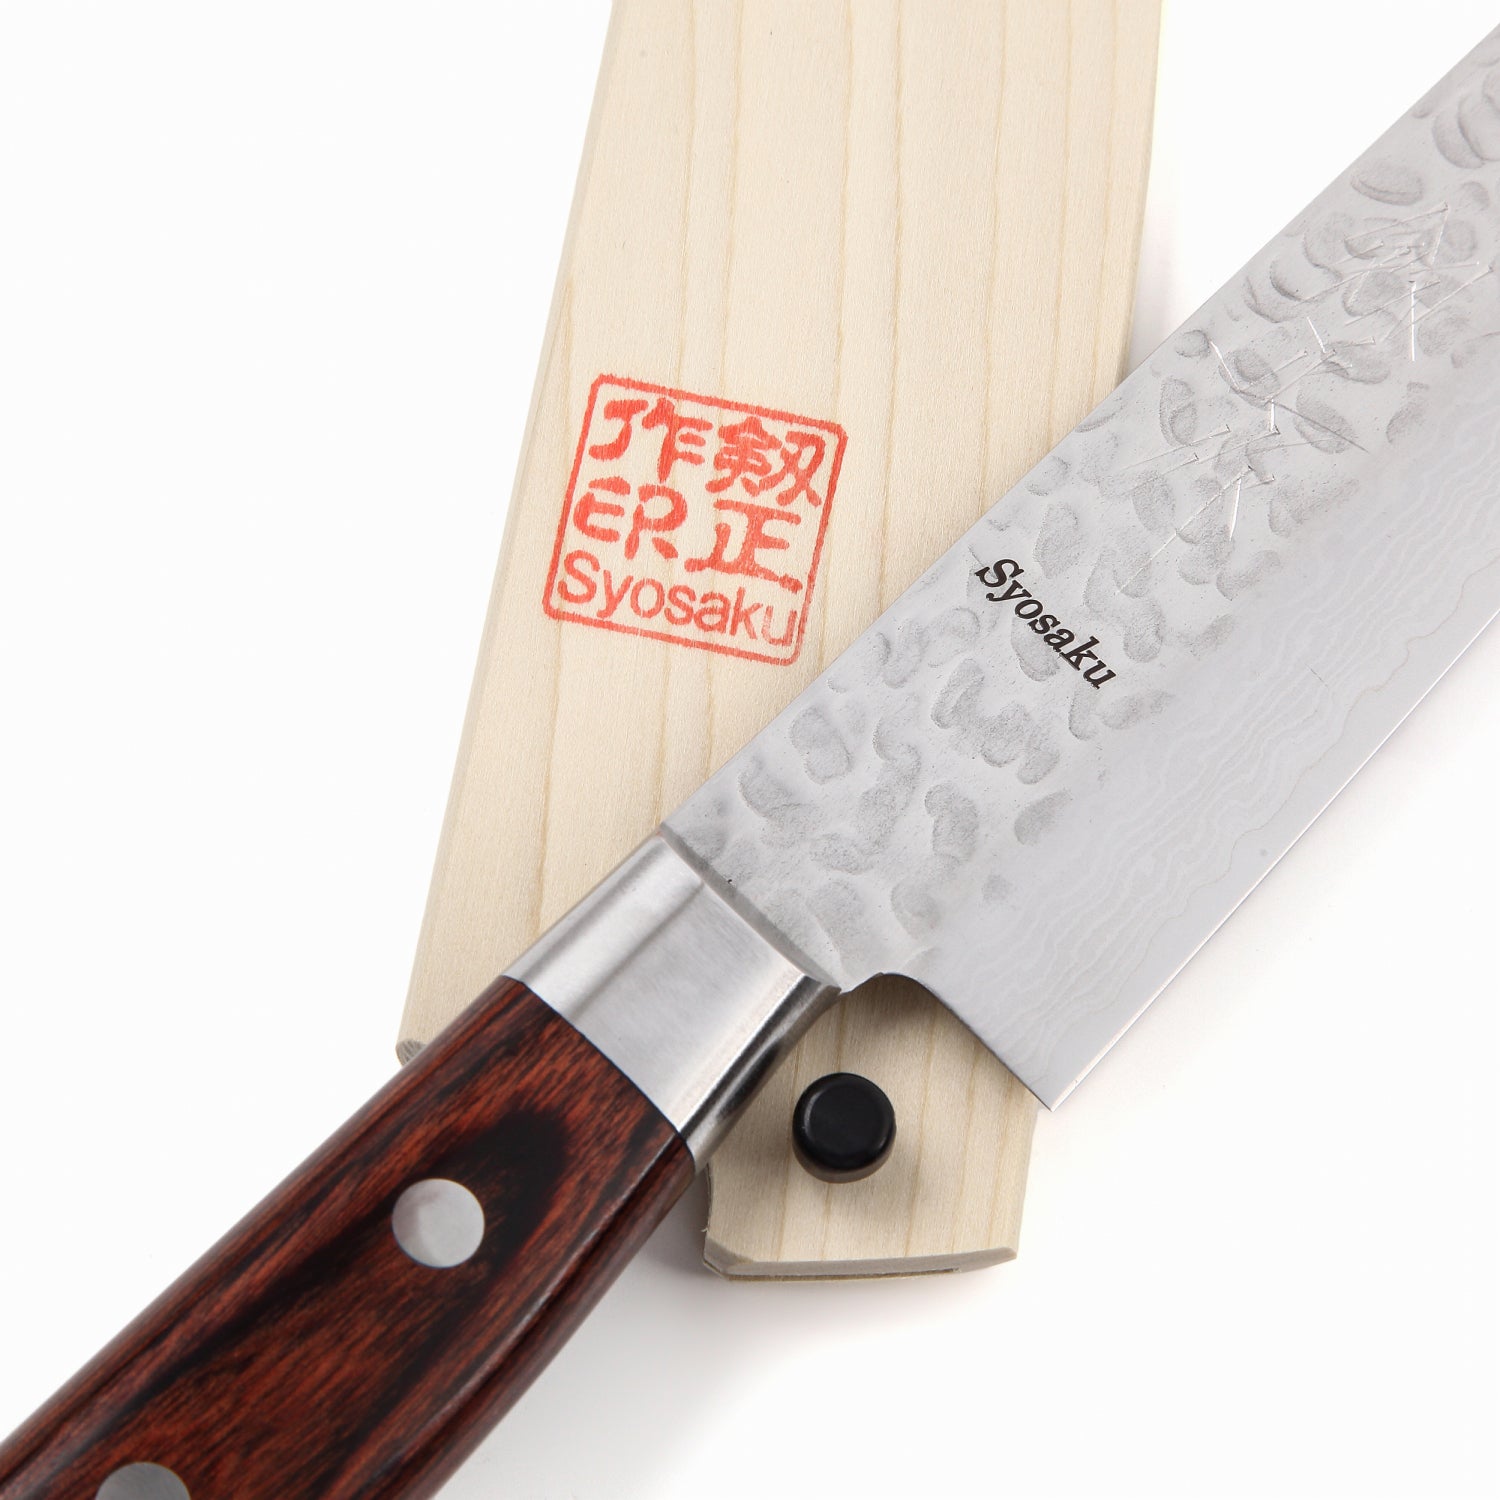 Syosaku Japanese Sujihiki Knife Hammered Damascus VG-10 16 Layer Mahogany Handle, Slicer 9.5-inch (240mm) with Magnolia Wood Sheath Saya Cover